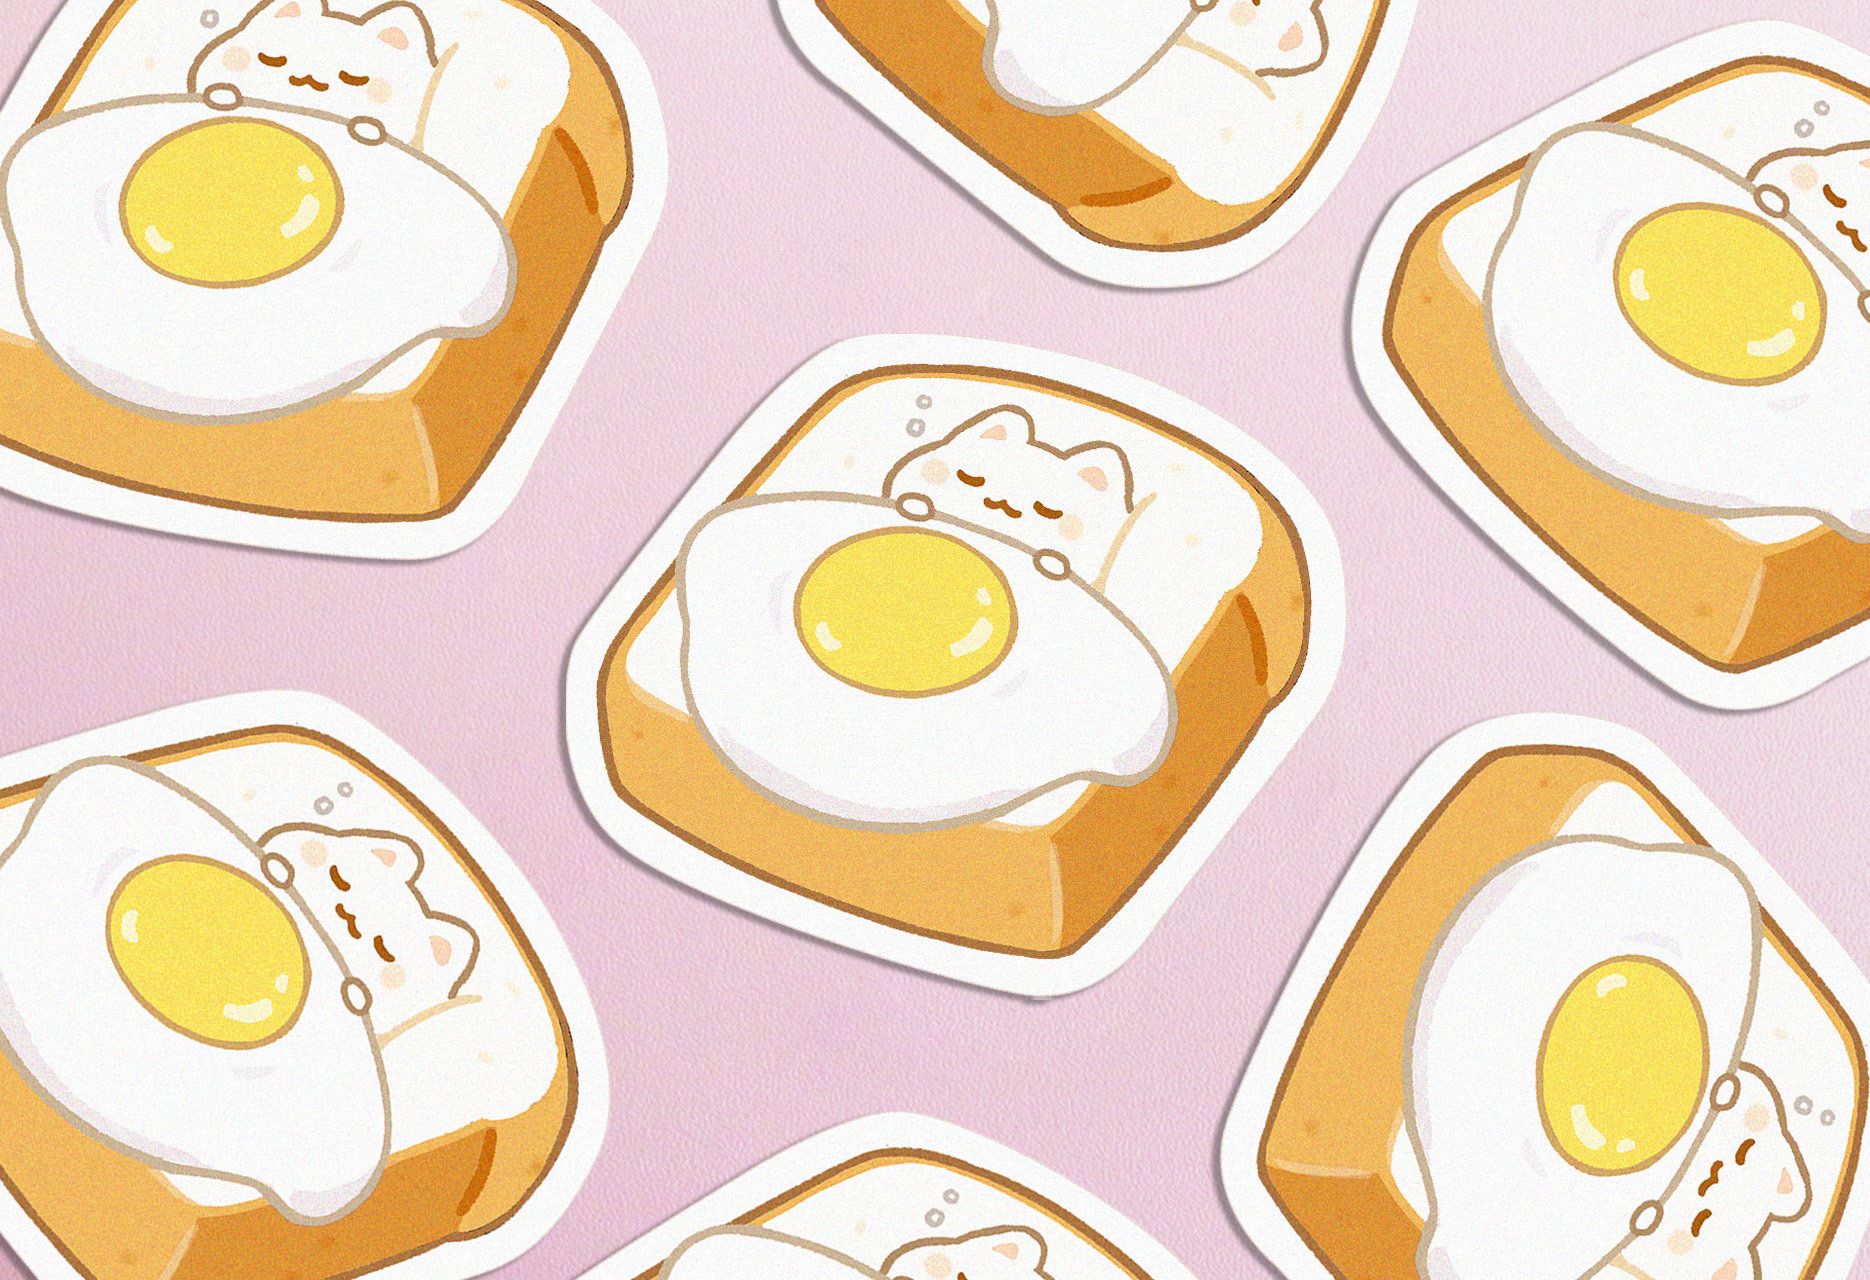 Egg Toast Bed Kitty Sticker Cat Sticker Cute Animal Kawaii